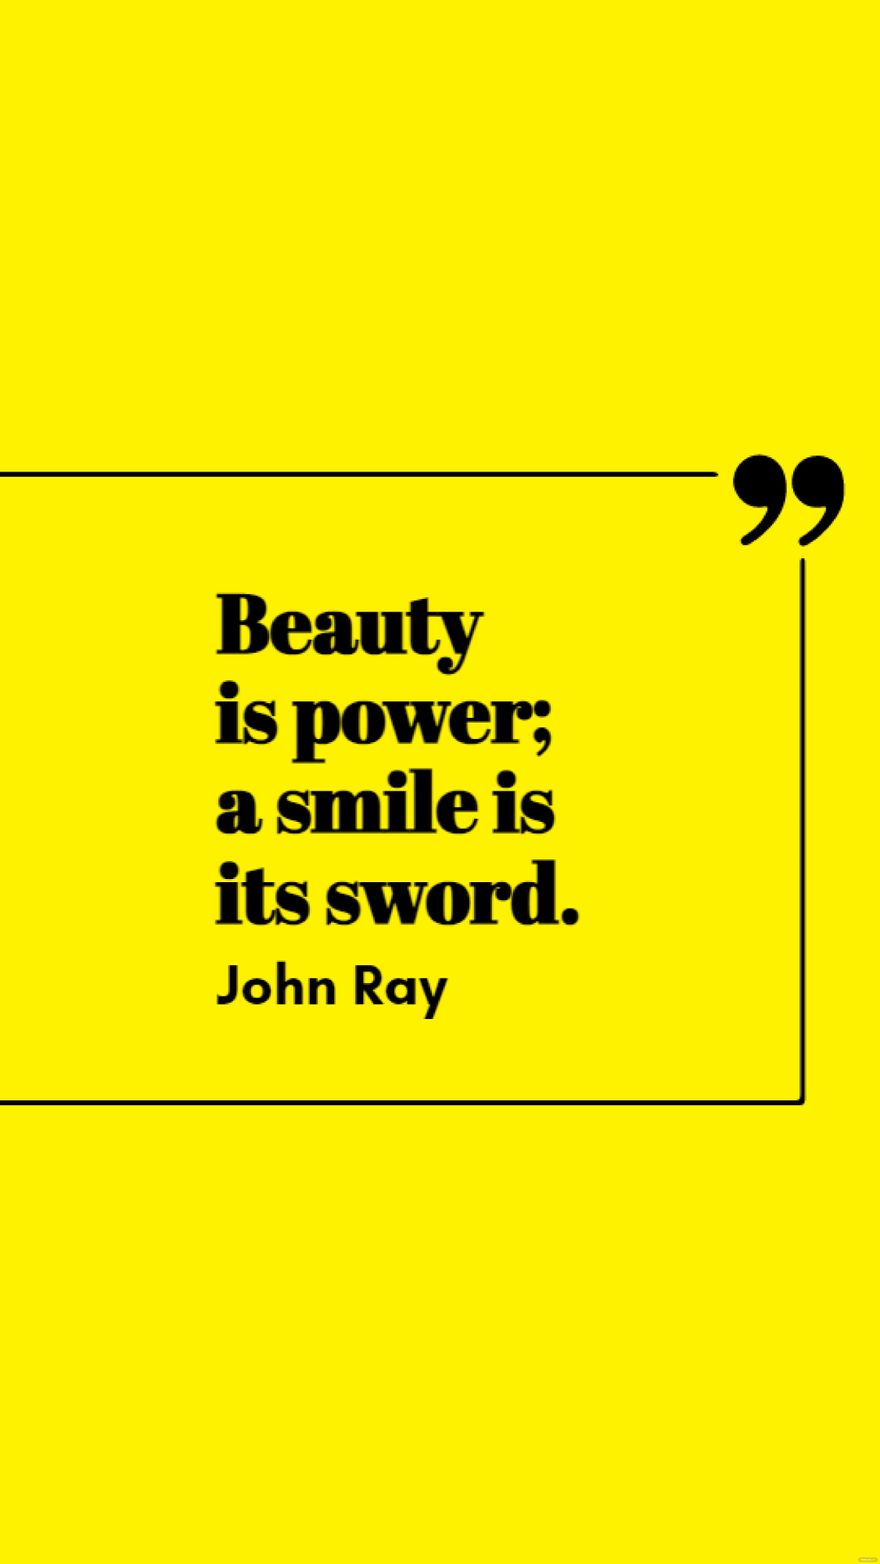 Free John Ray - Beauty is power; a smile is its sword. in JPG